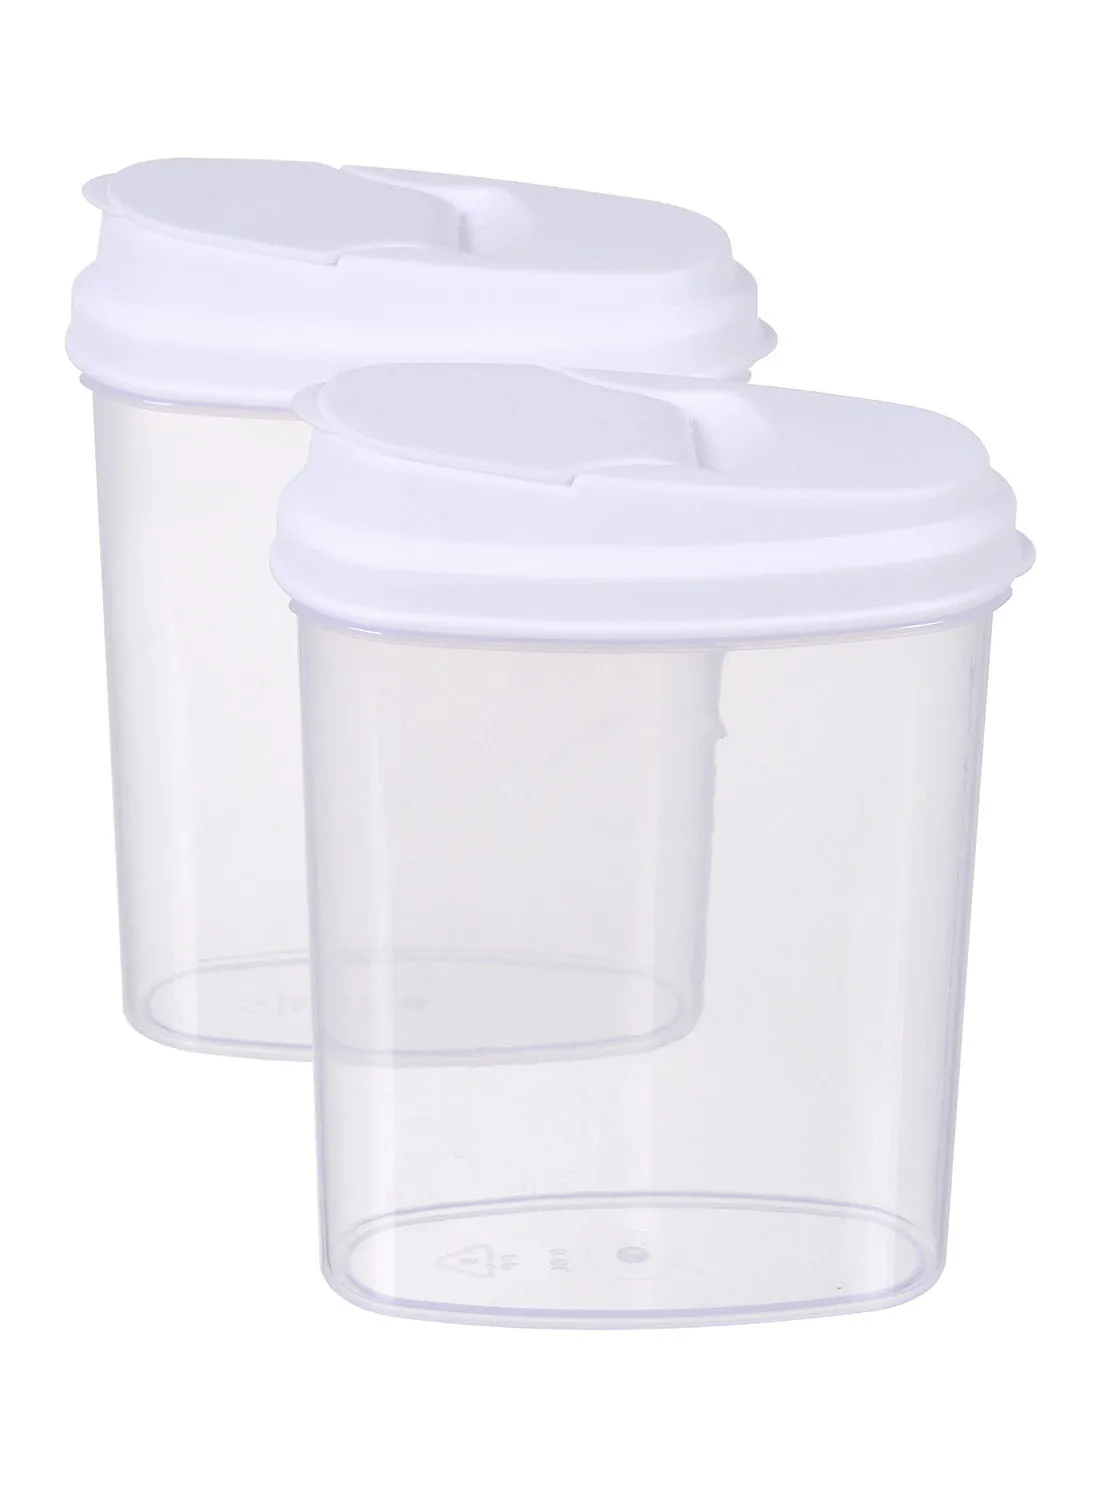 Amal 2 Piece Plastic Food Container Set - Easy Pour Lids - Food Storage Box - Storage Boxes - Kitchen Cabinet Organizers - White